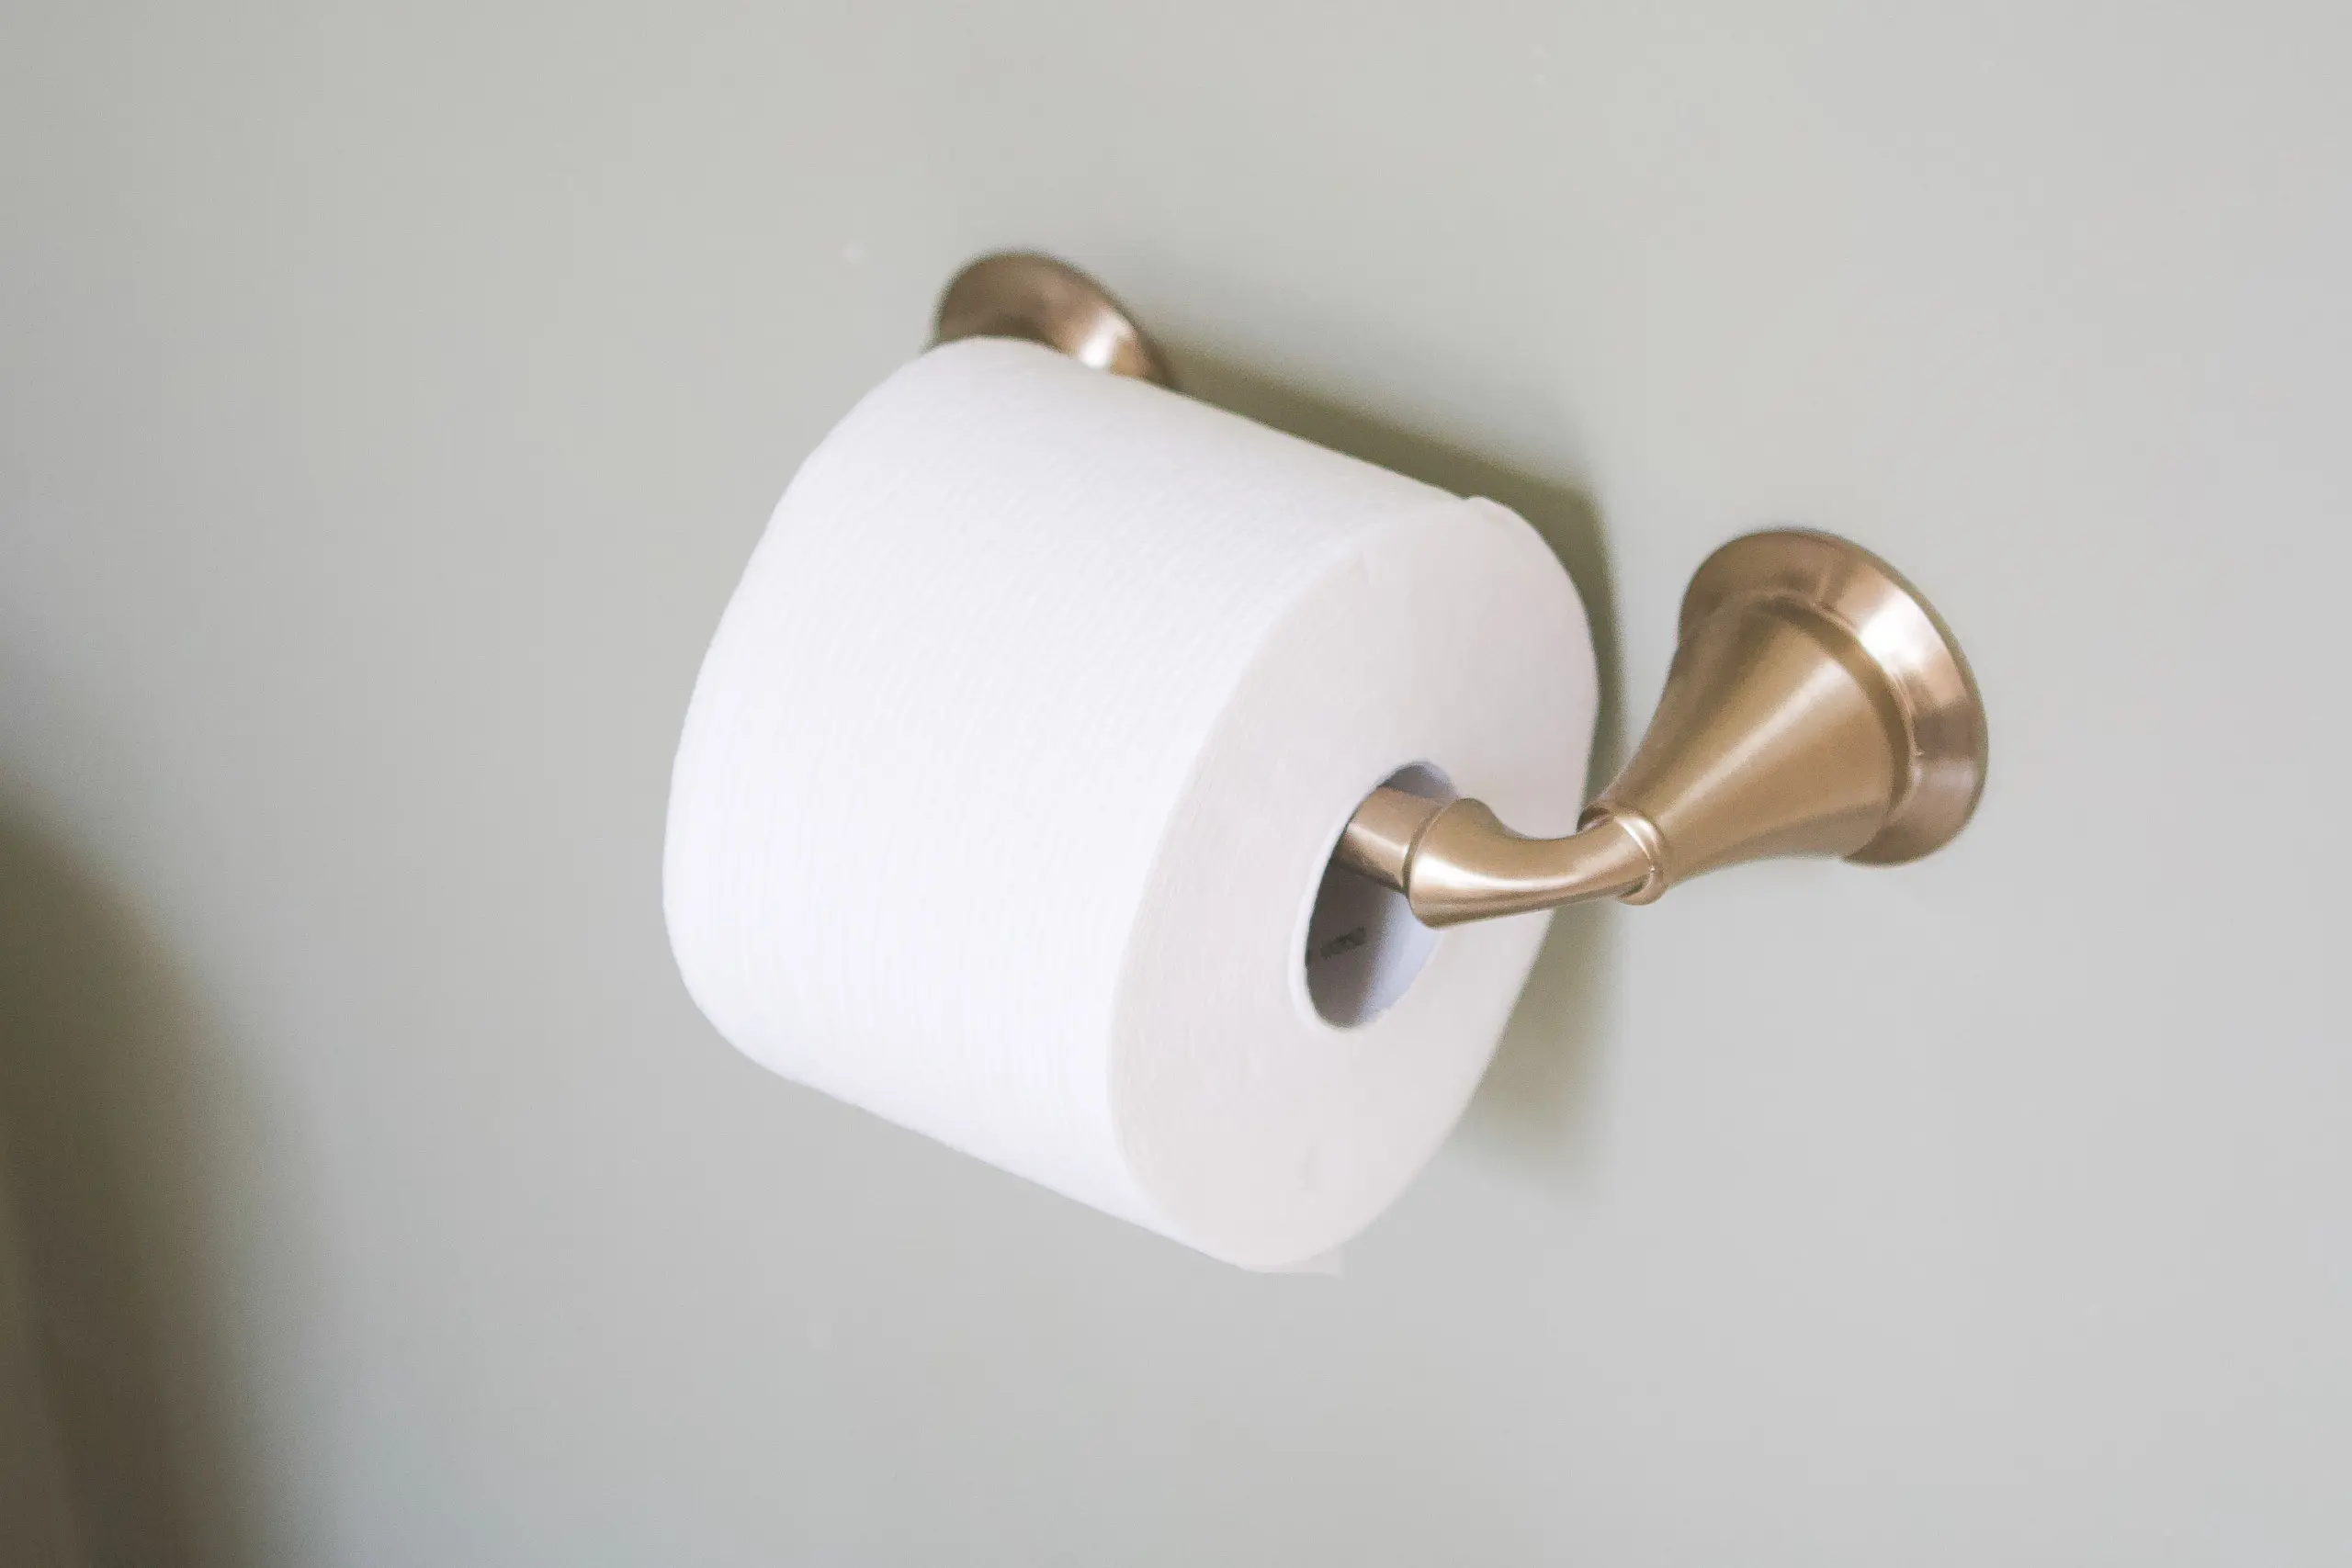 Gold toilet paper holder